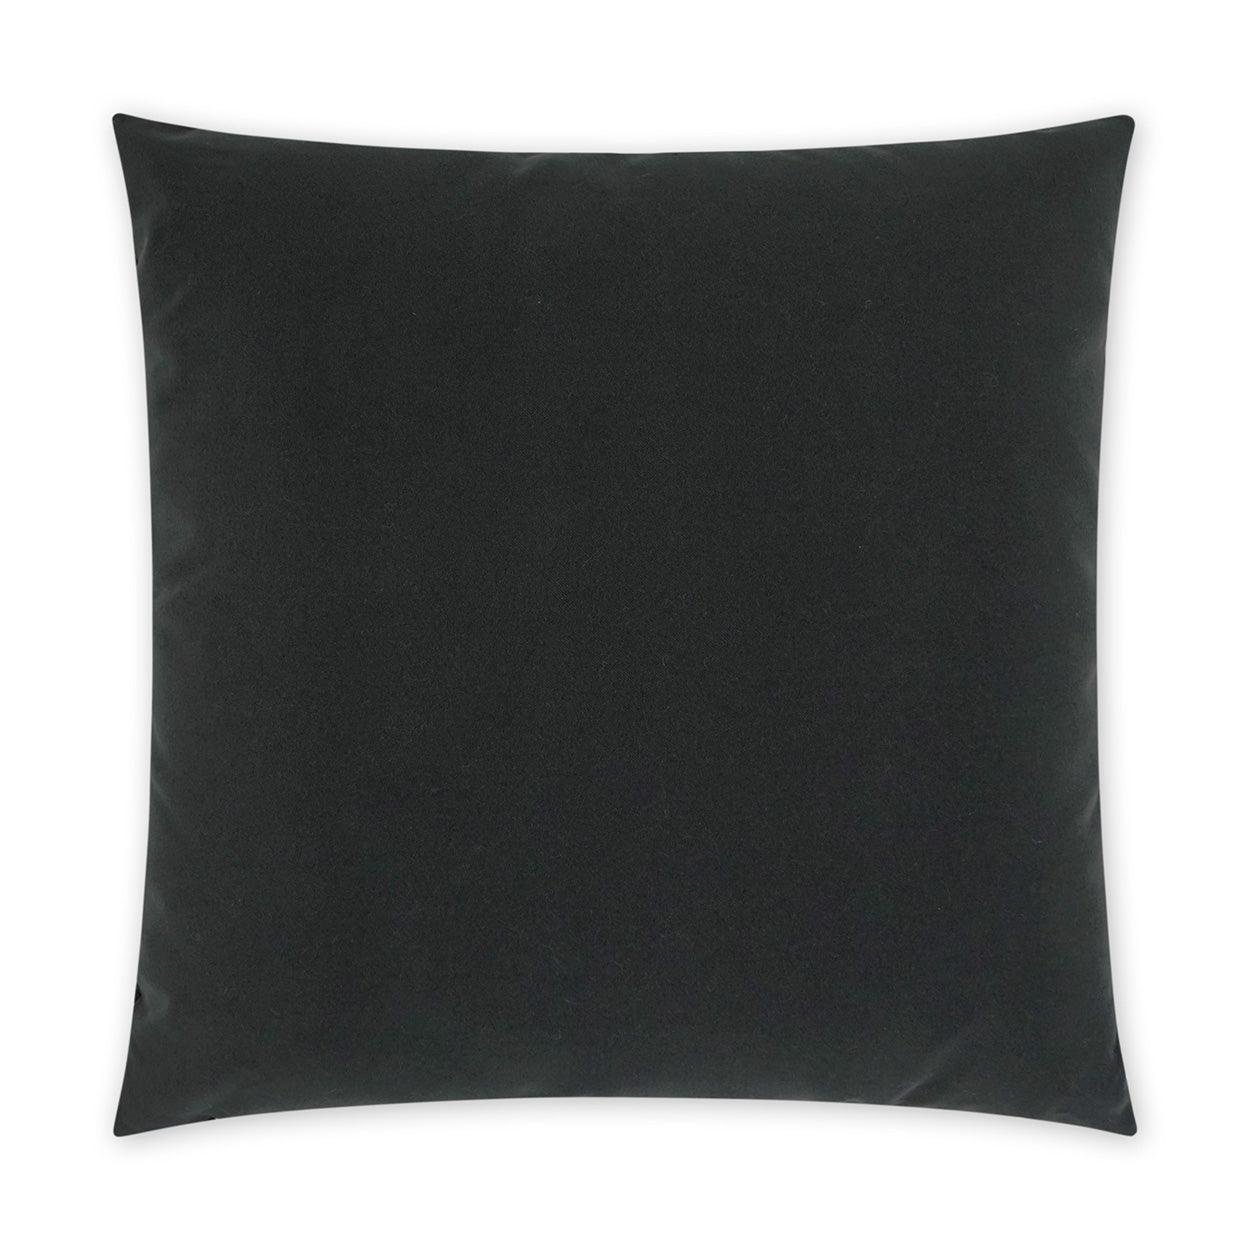 LOOMLAN Outdoor - Outdoor Sundance Duo Pillow - Charcoal - Outdoor Pillows